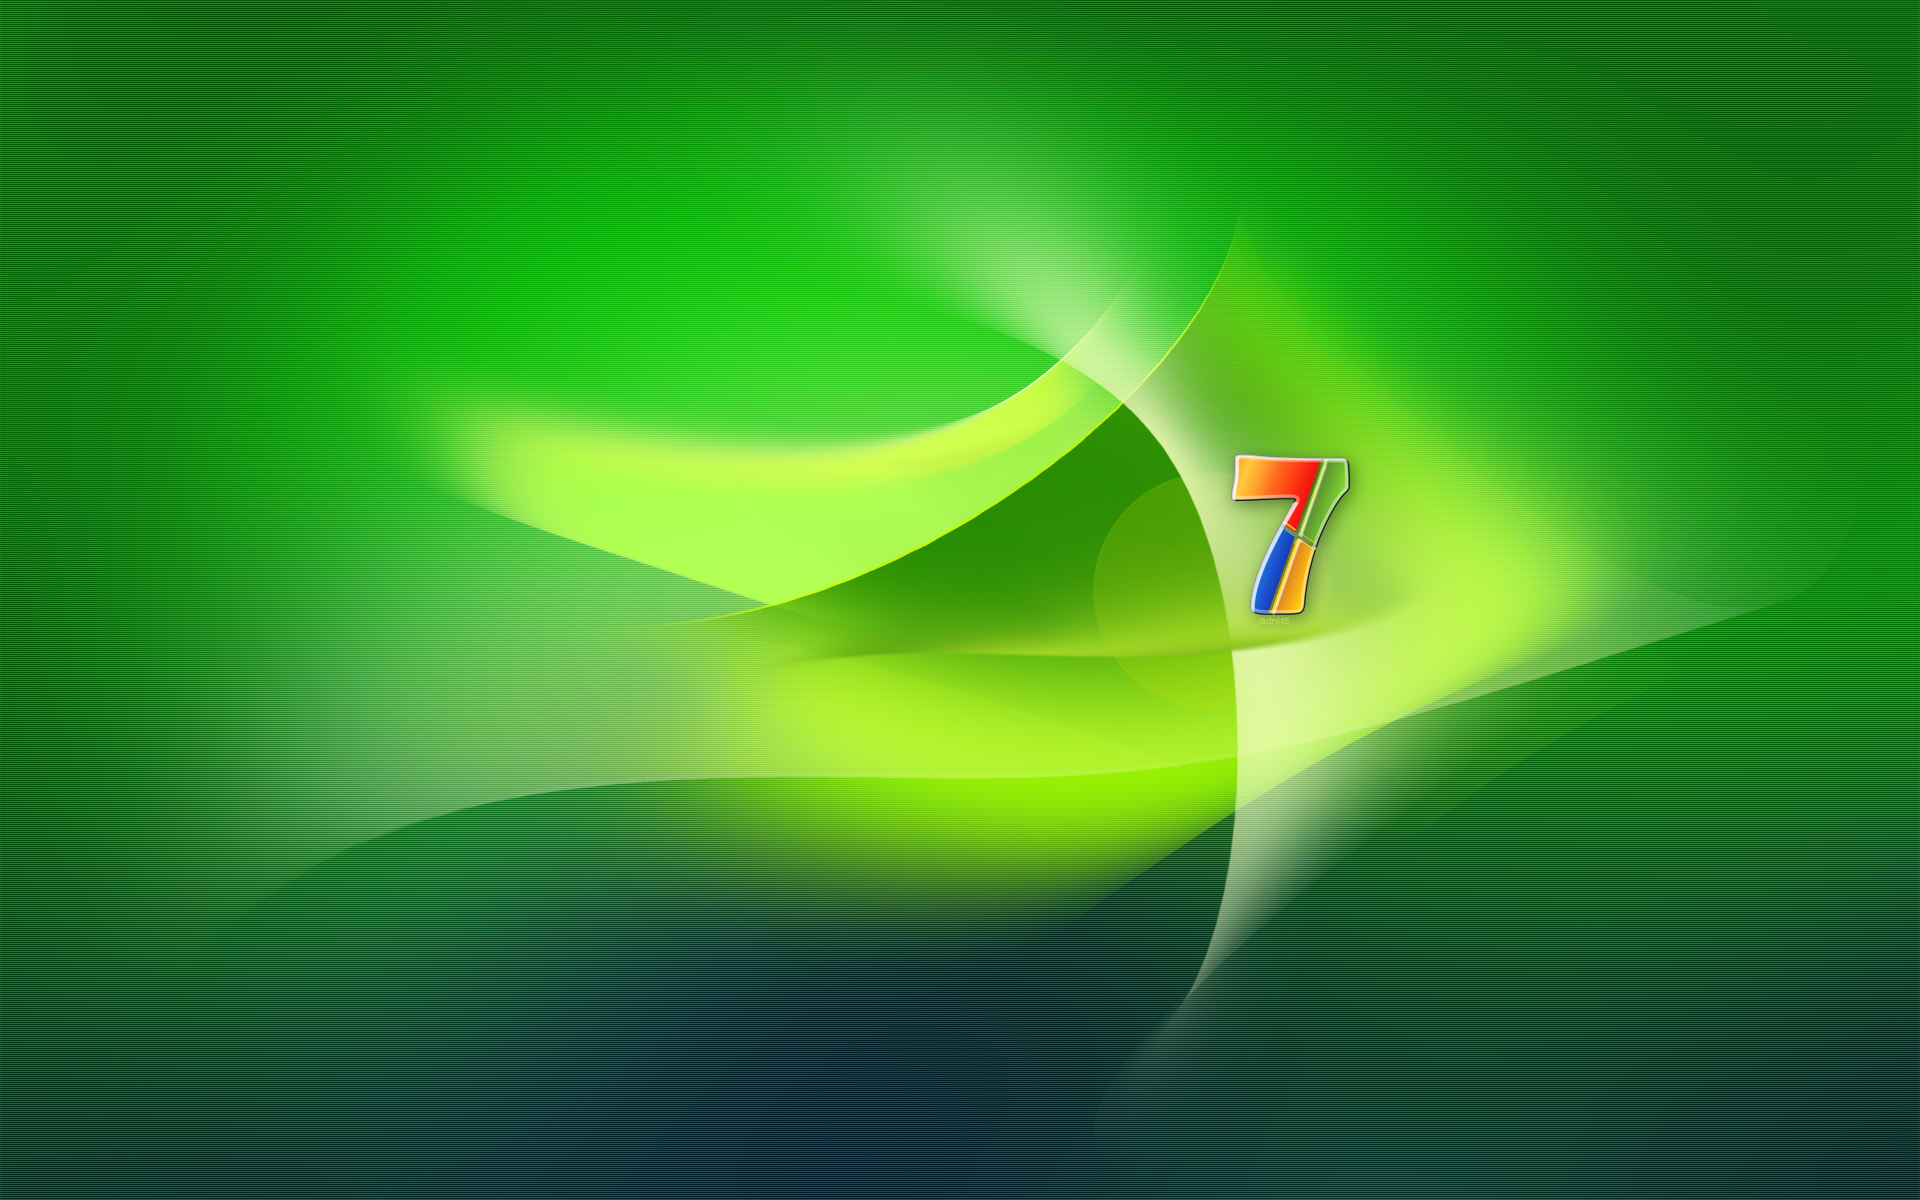 Baixar papel de parede para celular de Windows 7, Microsoft, Tecnologia, Janelas, Logotipo gratuito.